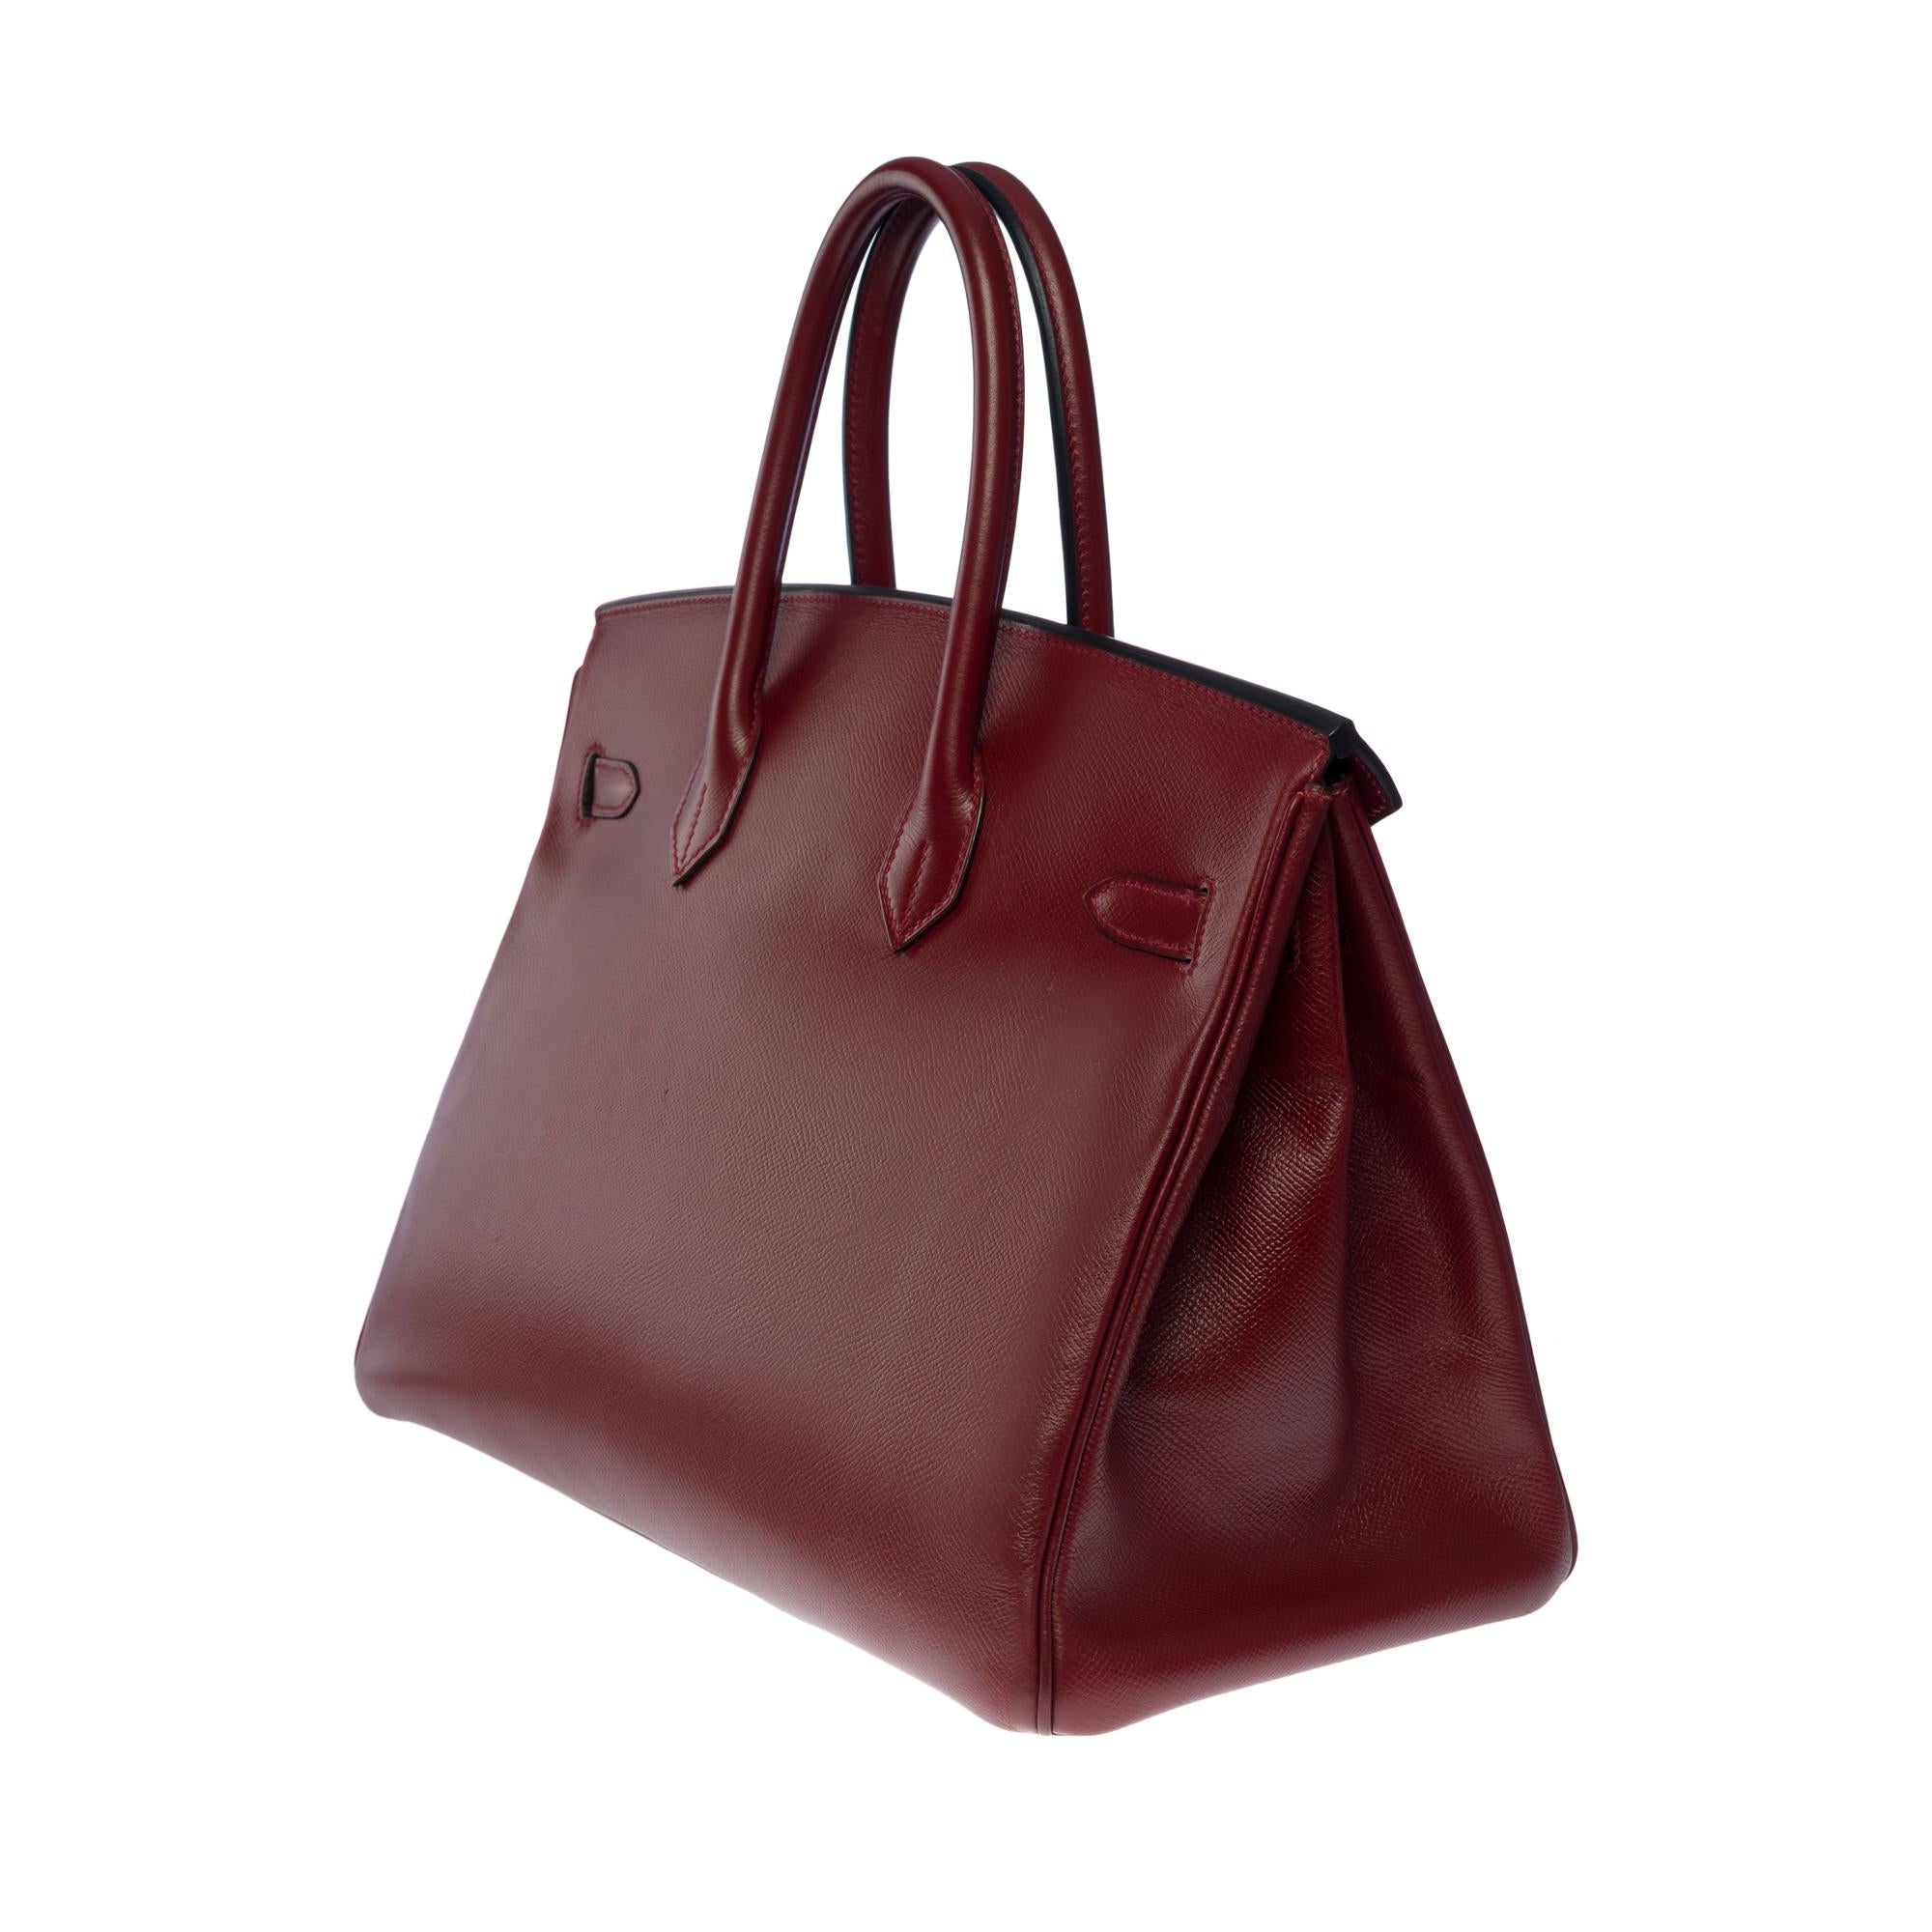 Women's or Men's Stunning Hermès Birkin 35 handbag in Rouge H (Burgundy) epsom leather, GHW